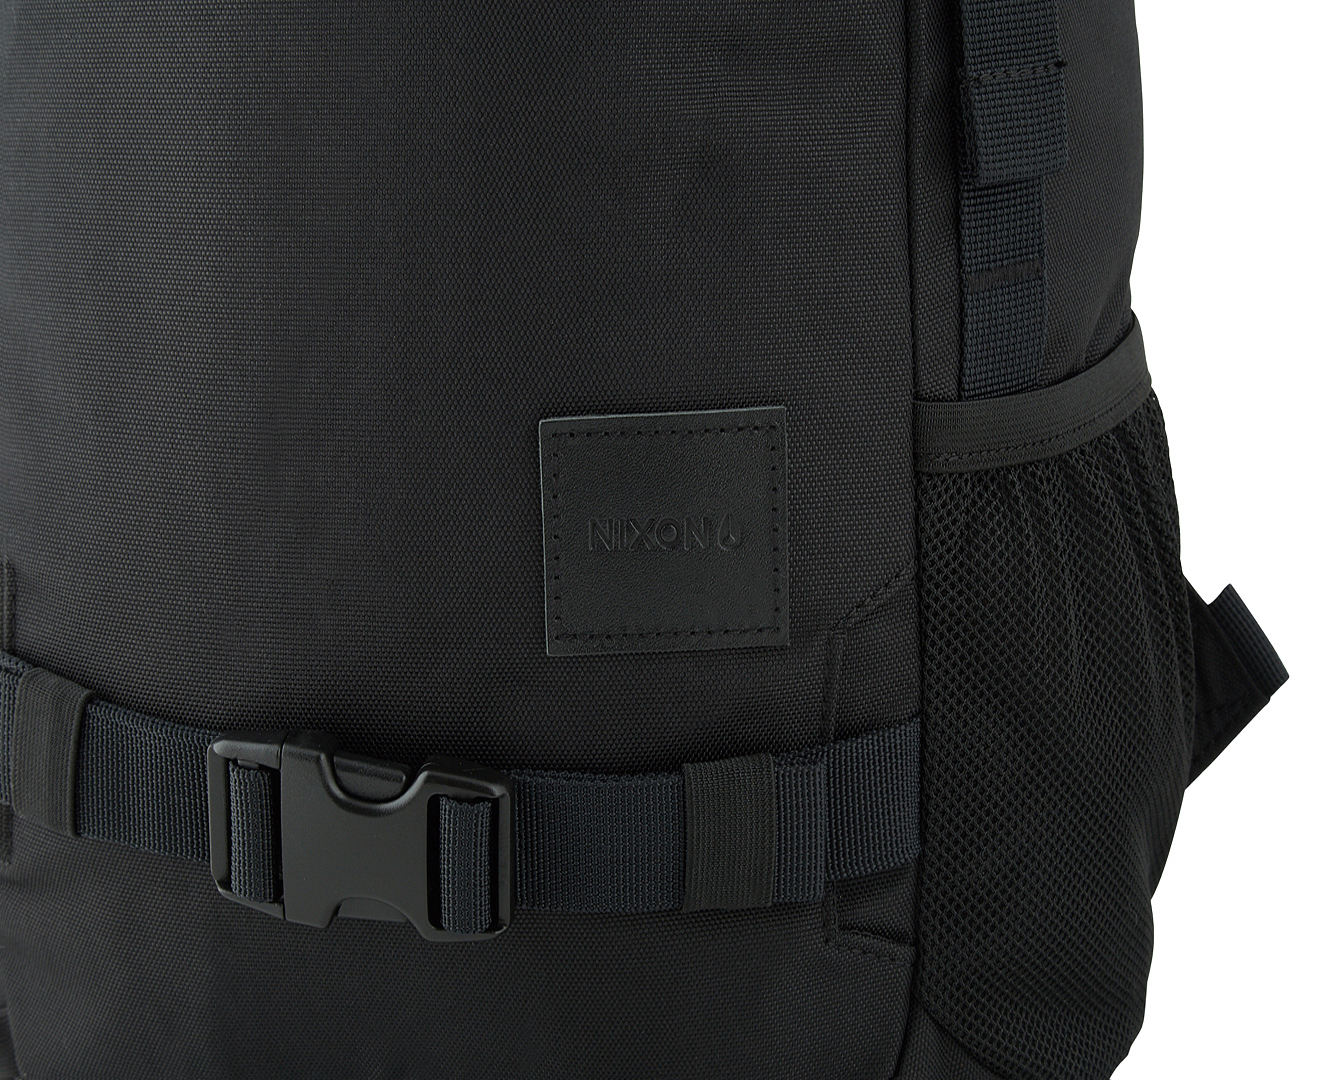 Nixon Small Landlock Backpack - All Black | Catch.com.au